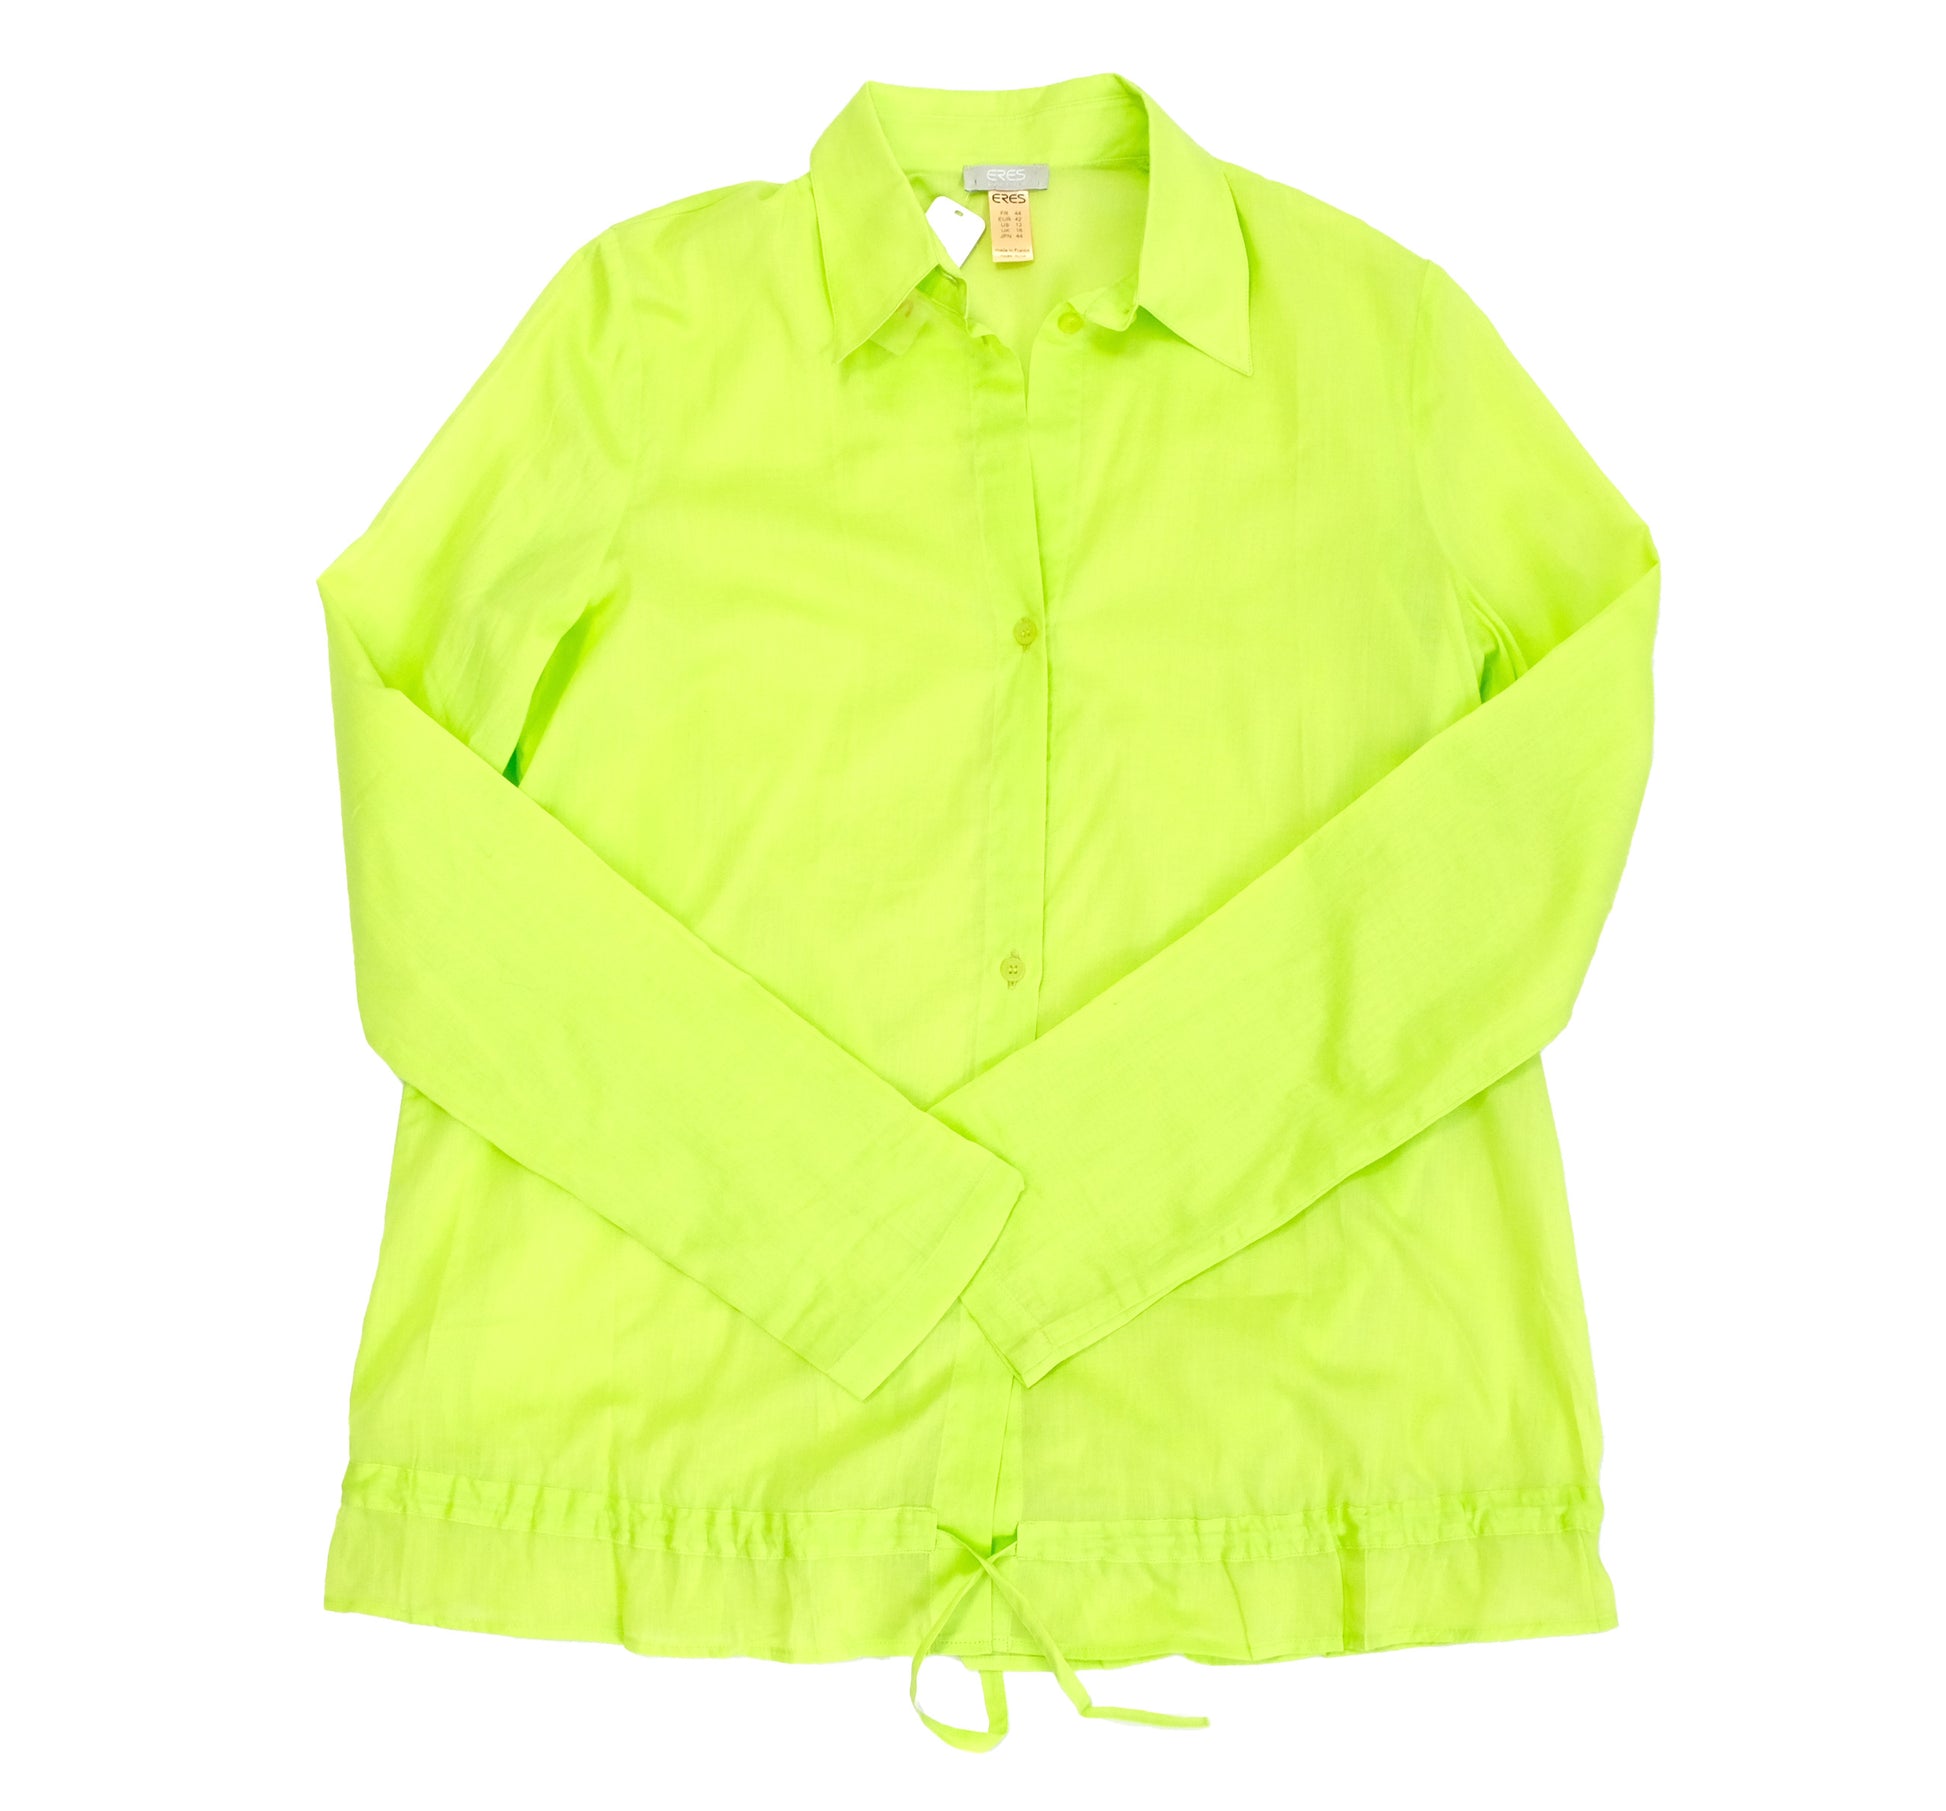 Eres Beach Shirt in Semi Sheer Lime Green Cotton, UK16